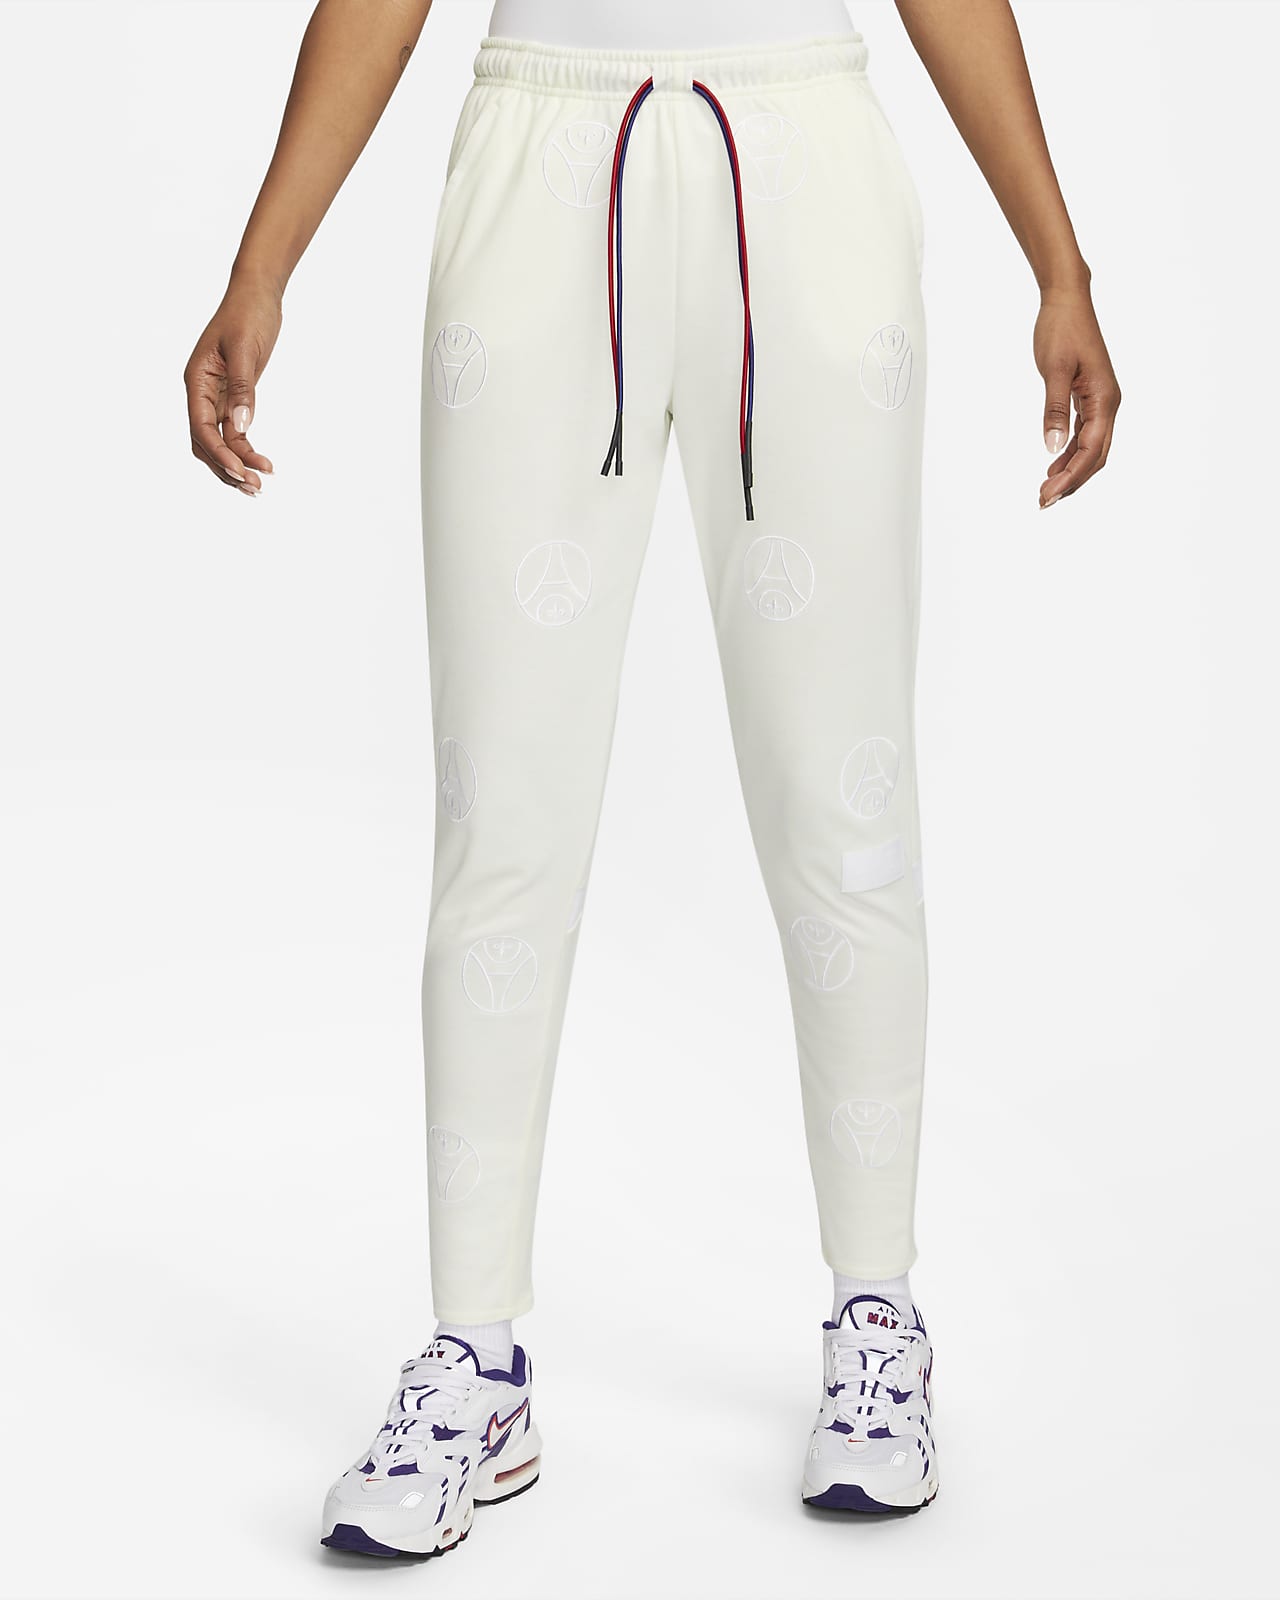 Nike Yoga Luxe Women's High-Waisted 7/8 Infinalon Leggings. Nike.com